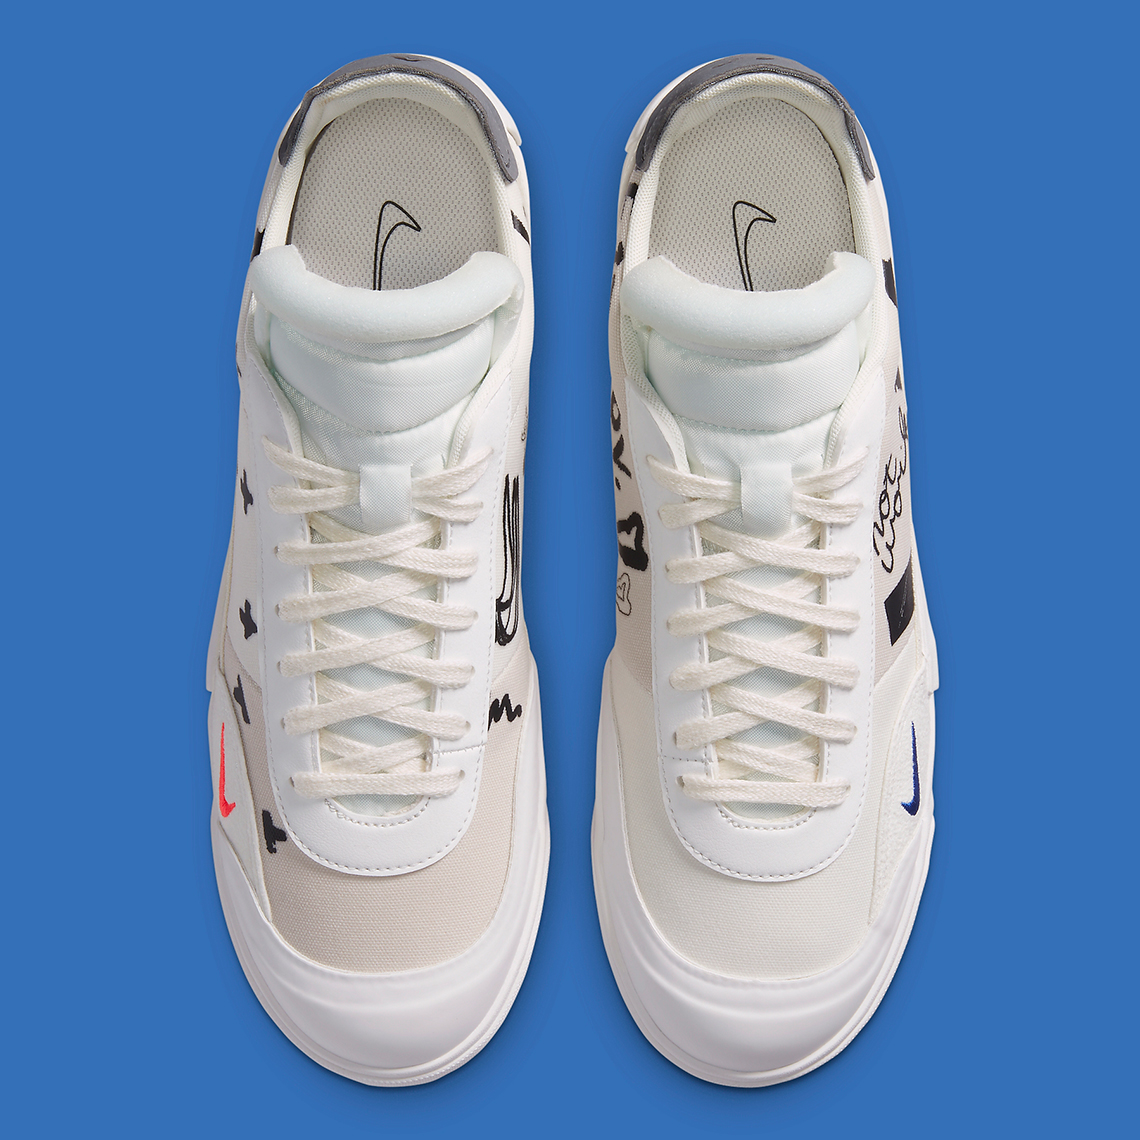 Nike Drop Type LX CJ5642-100 Release Info | SneakerNews.com